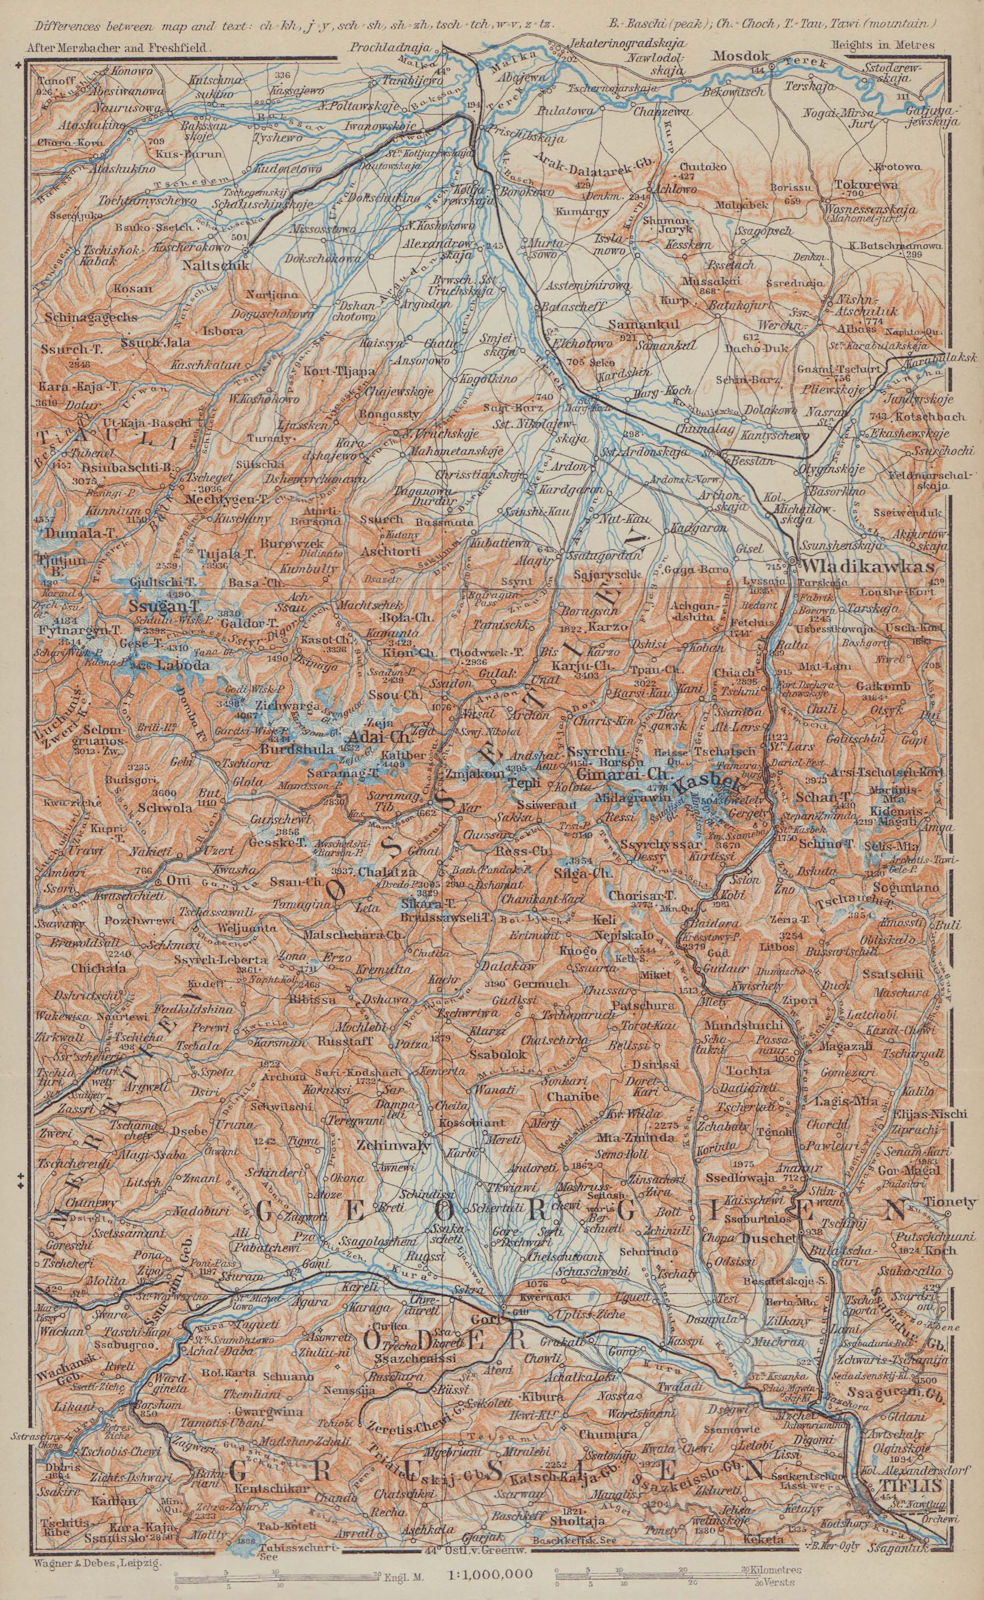 Associate Product Central Caucasus, eastern part. Ossetia & Georgia. BAEDEKER 1914 old map